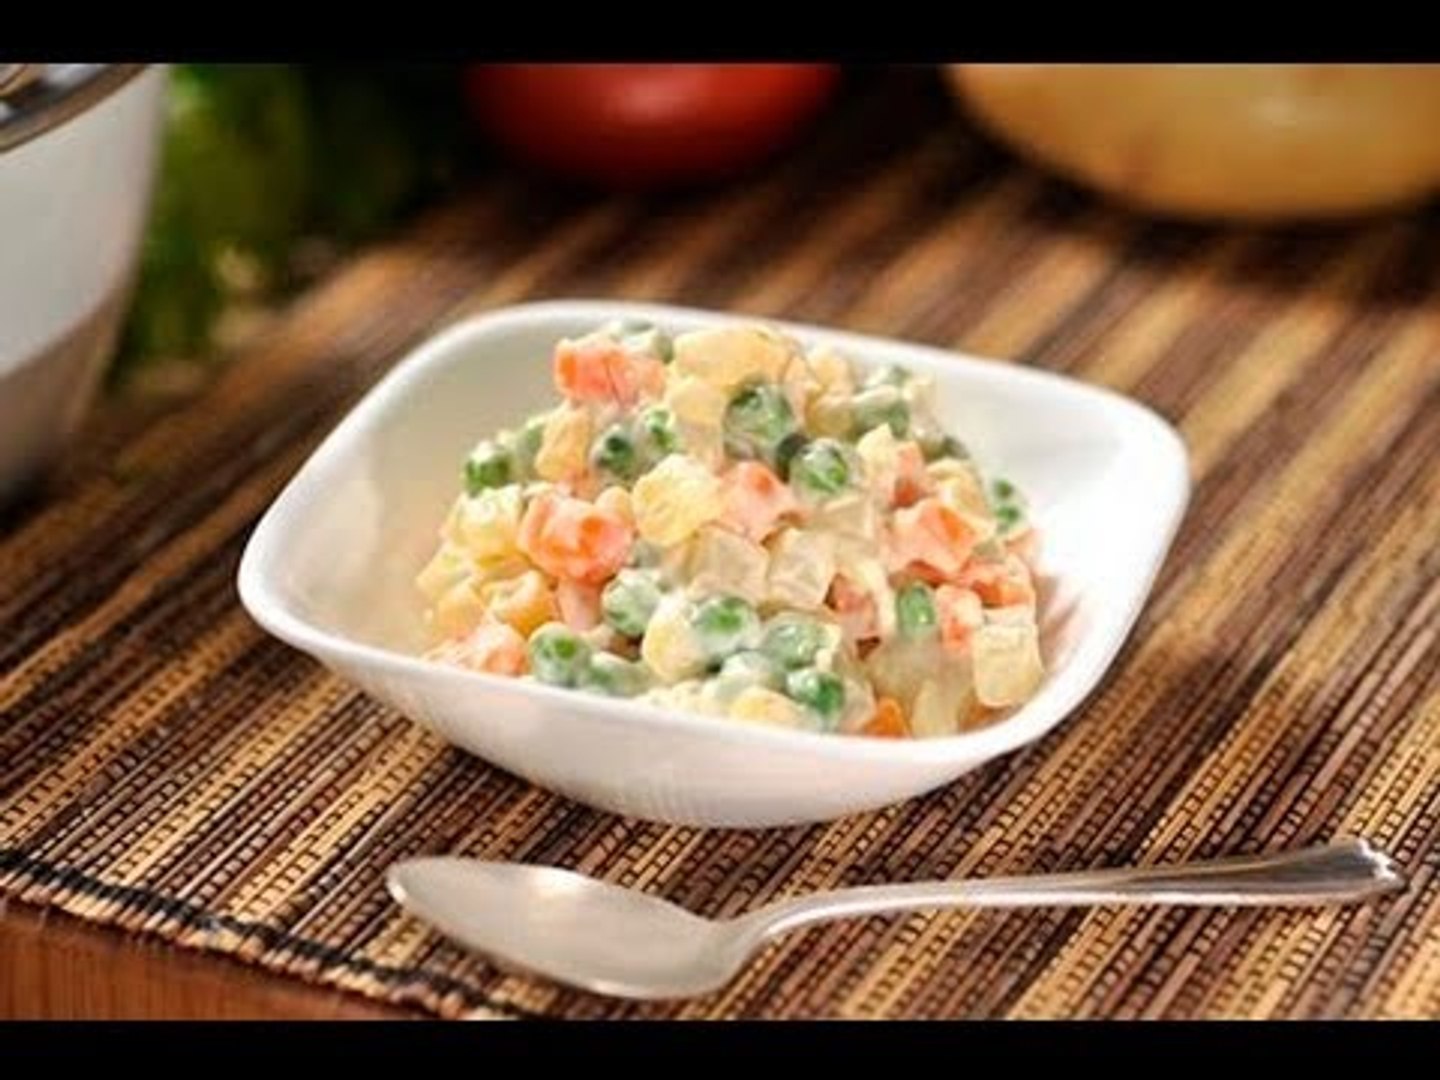 Ensalada rusa de verduras - Russian Vegetable Salad - Vídeo